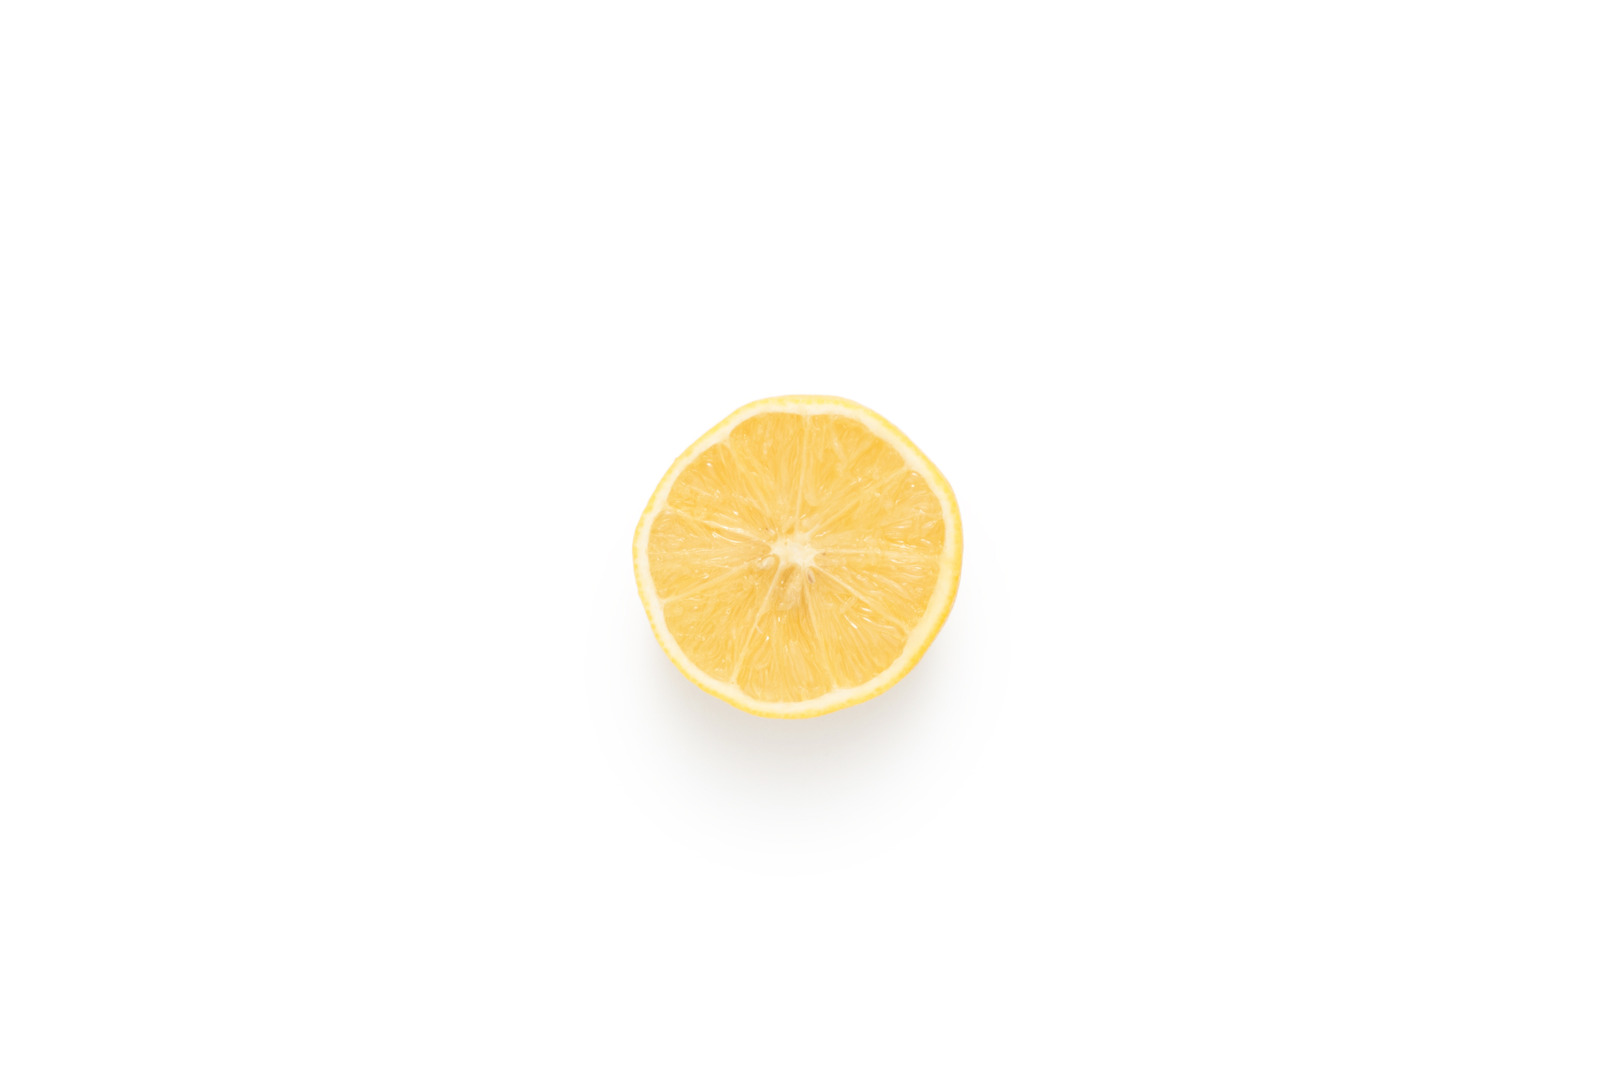 Ripe lemon